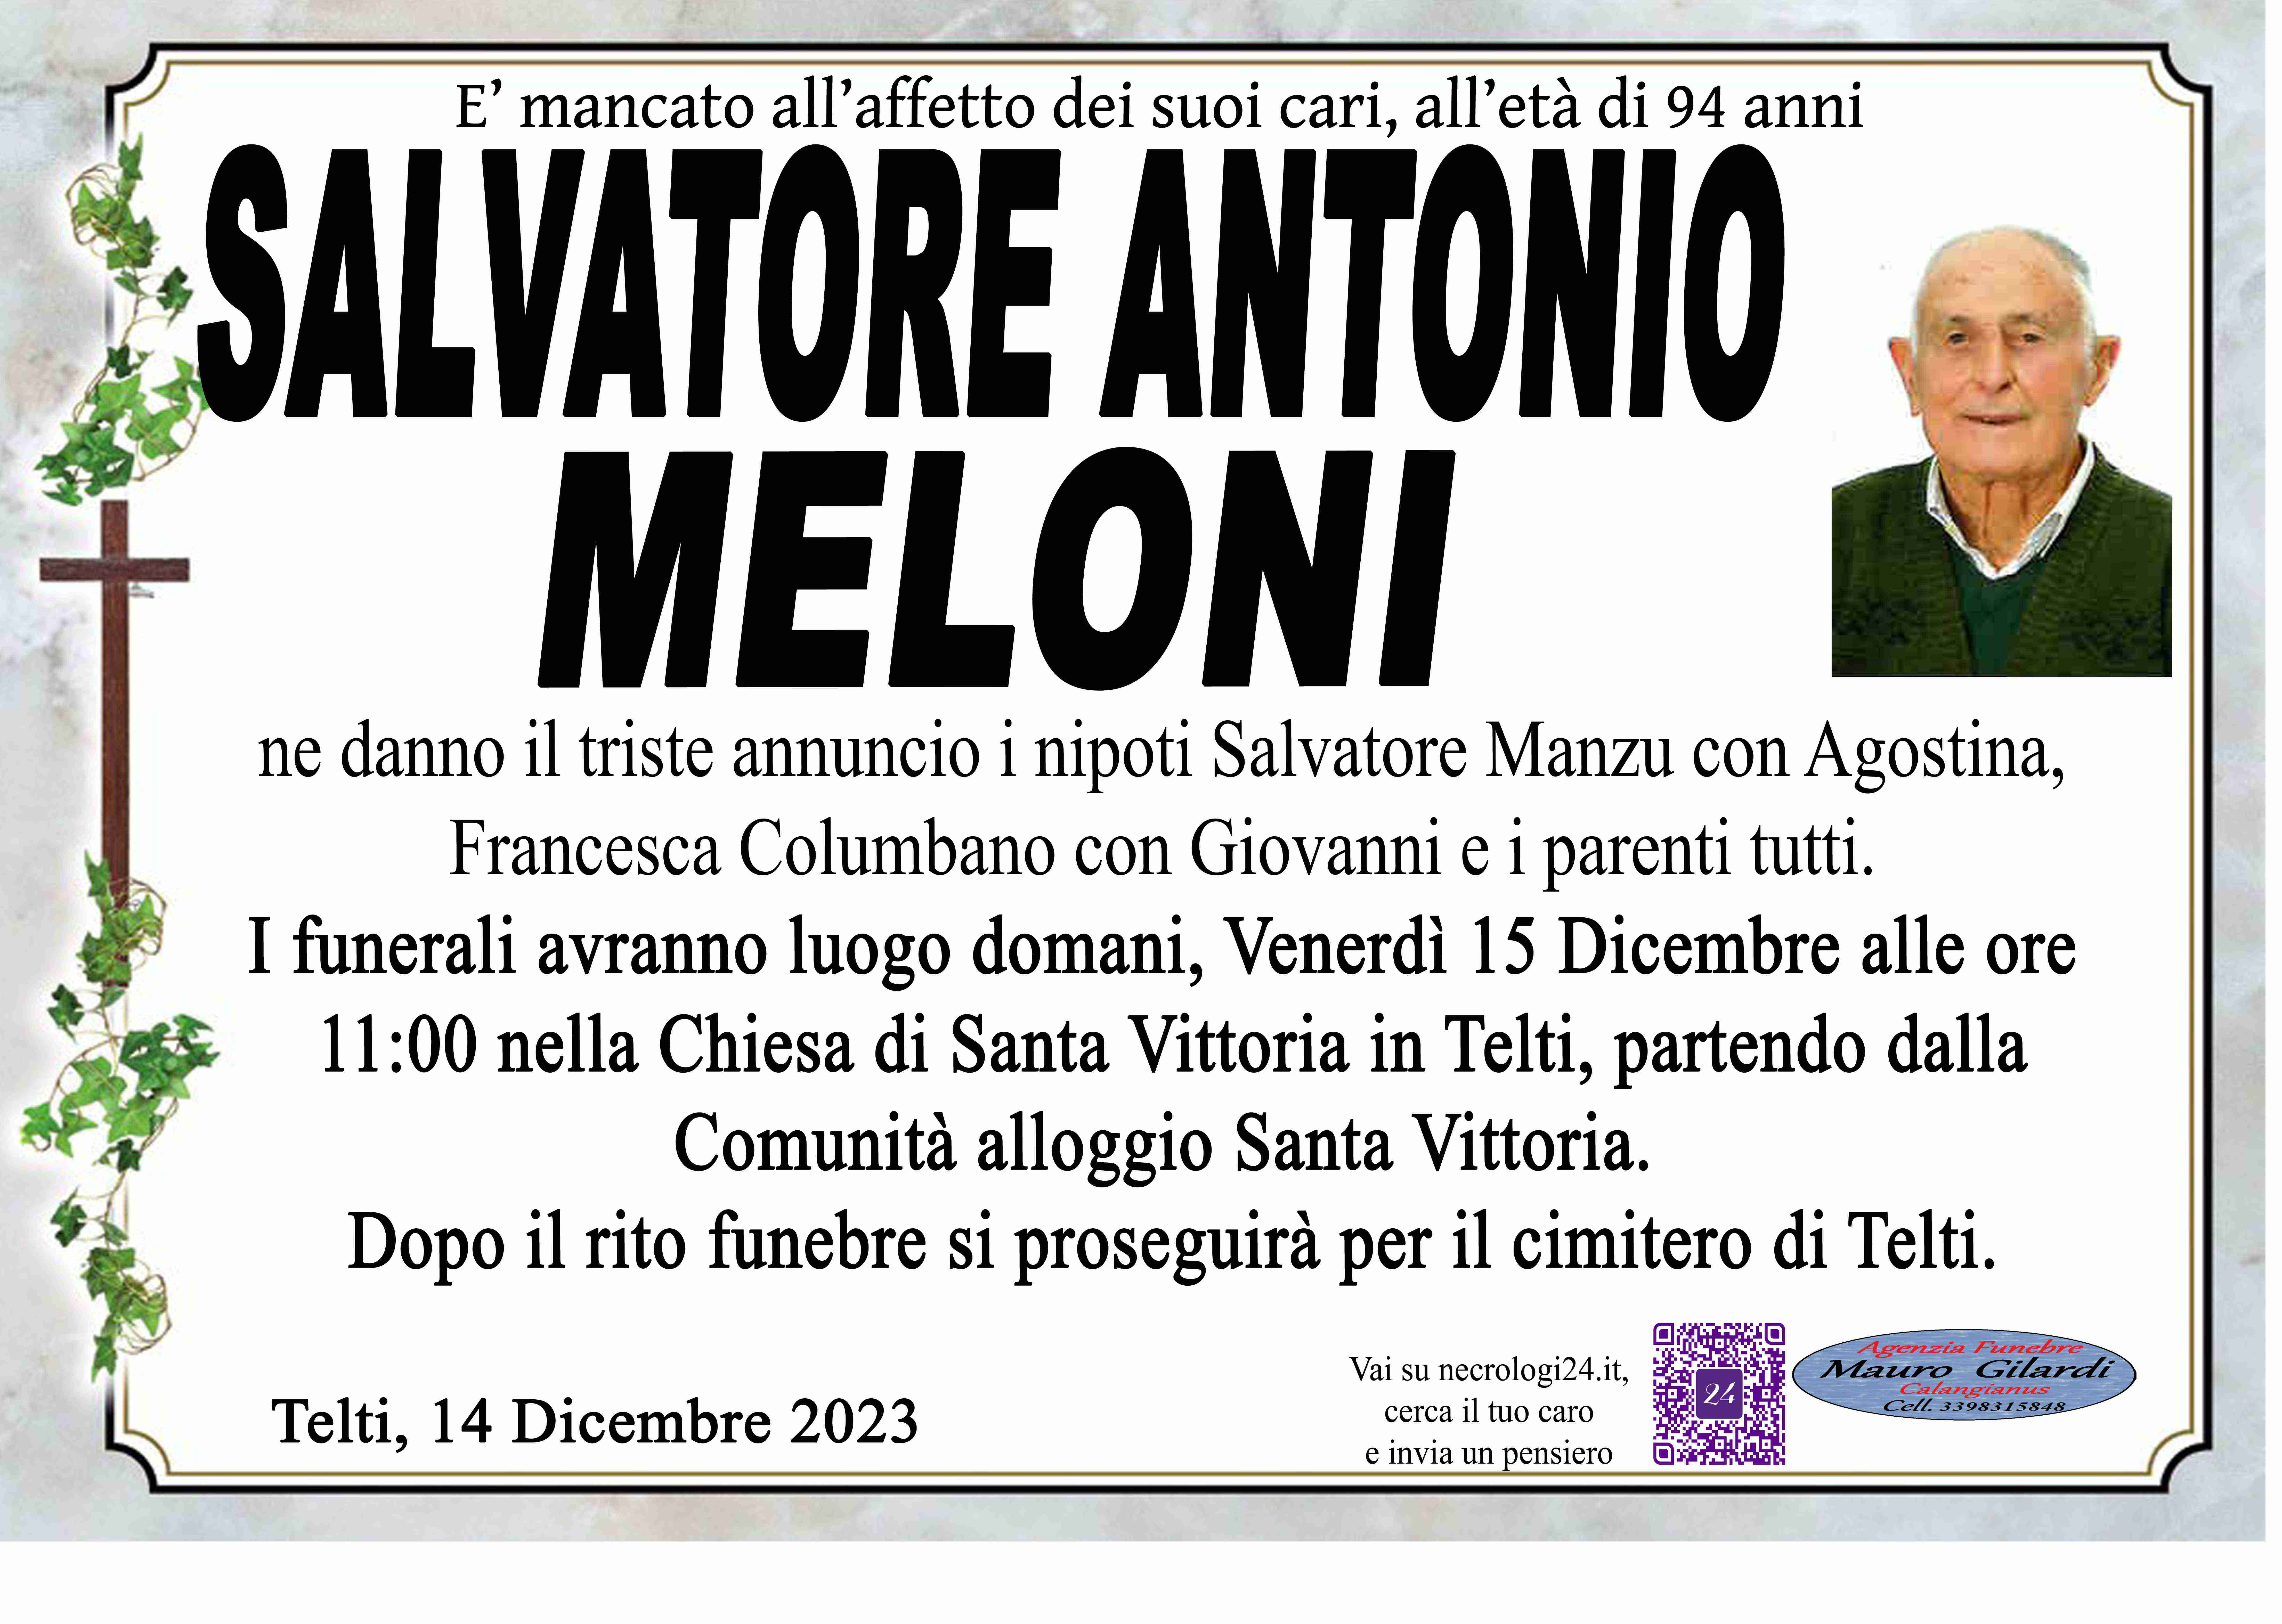 Salvatore Antonio Meloni